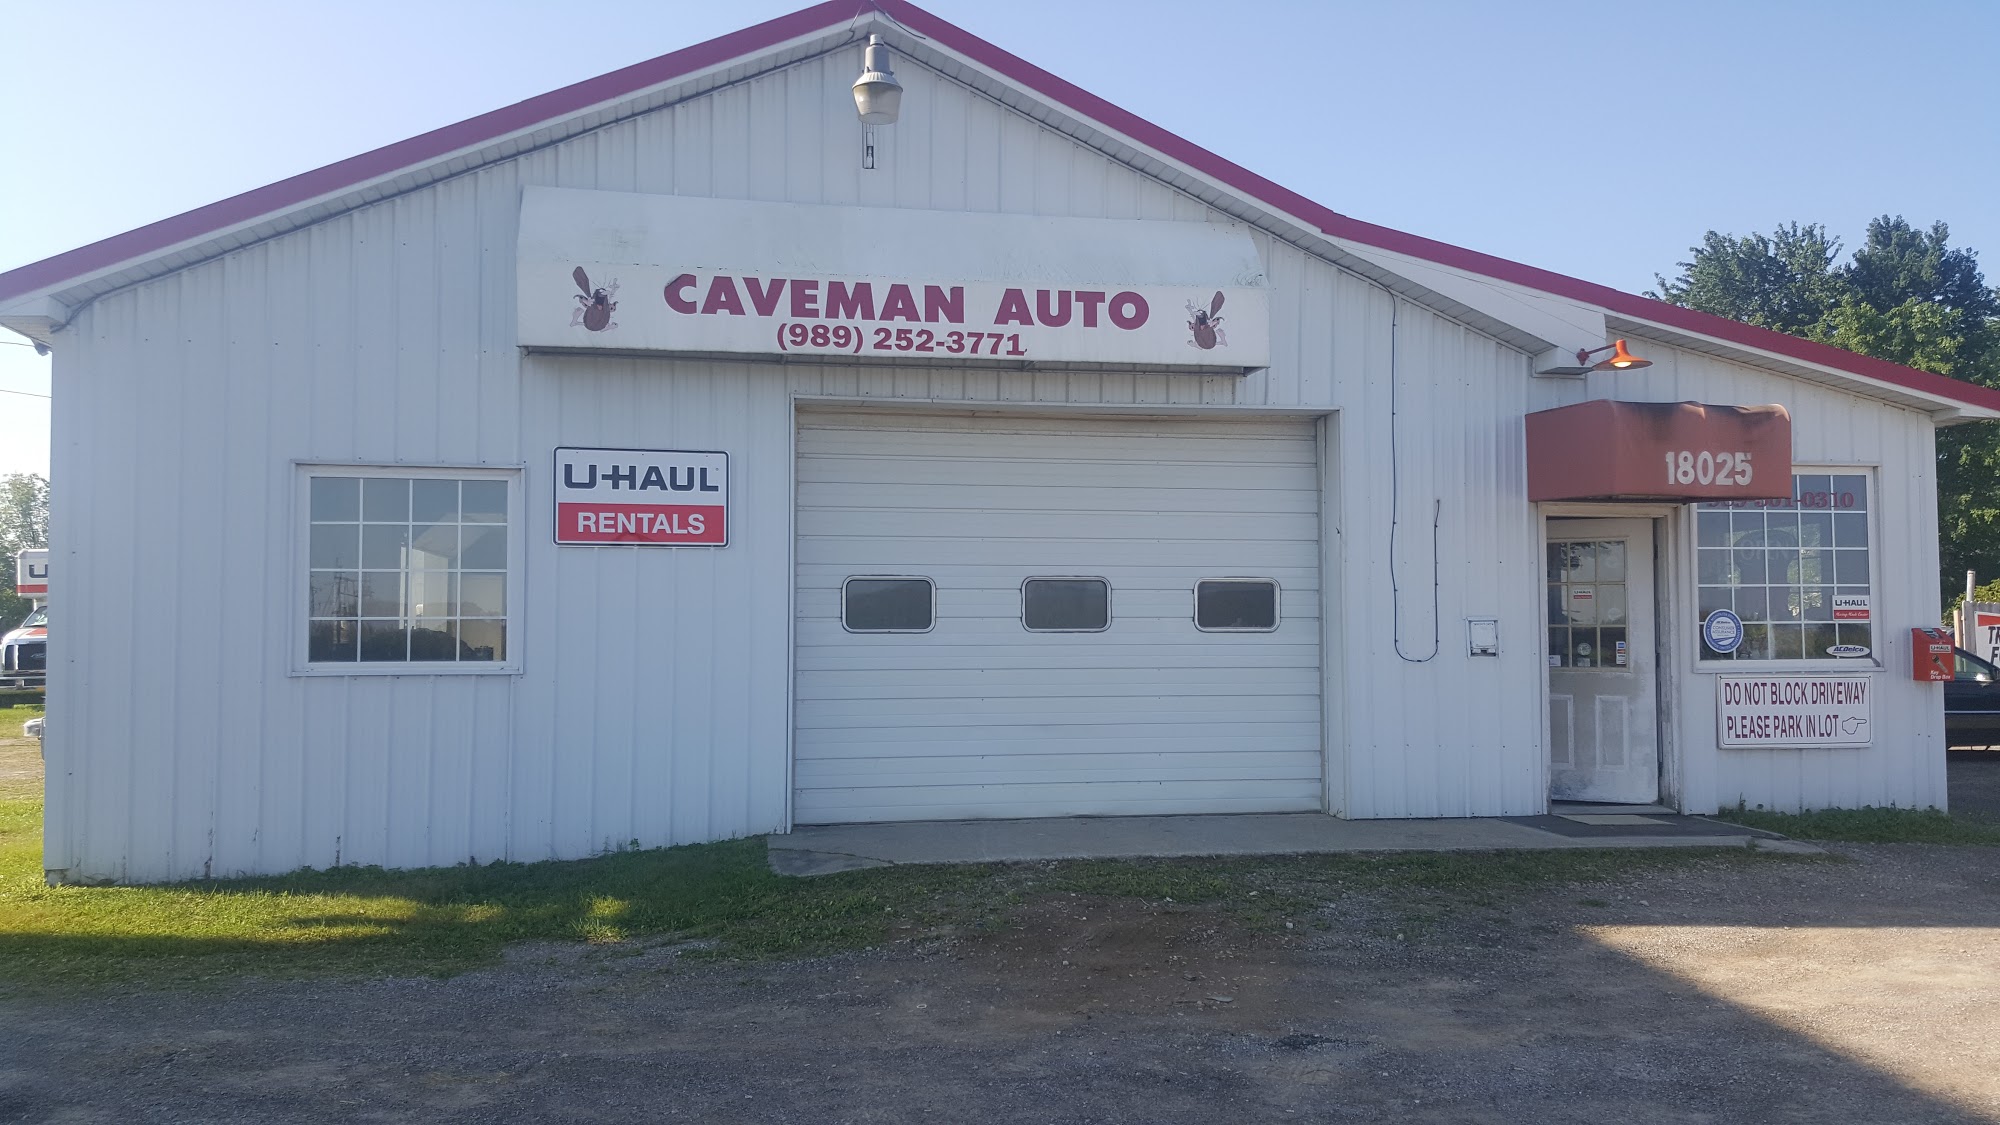 Caveman Auto